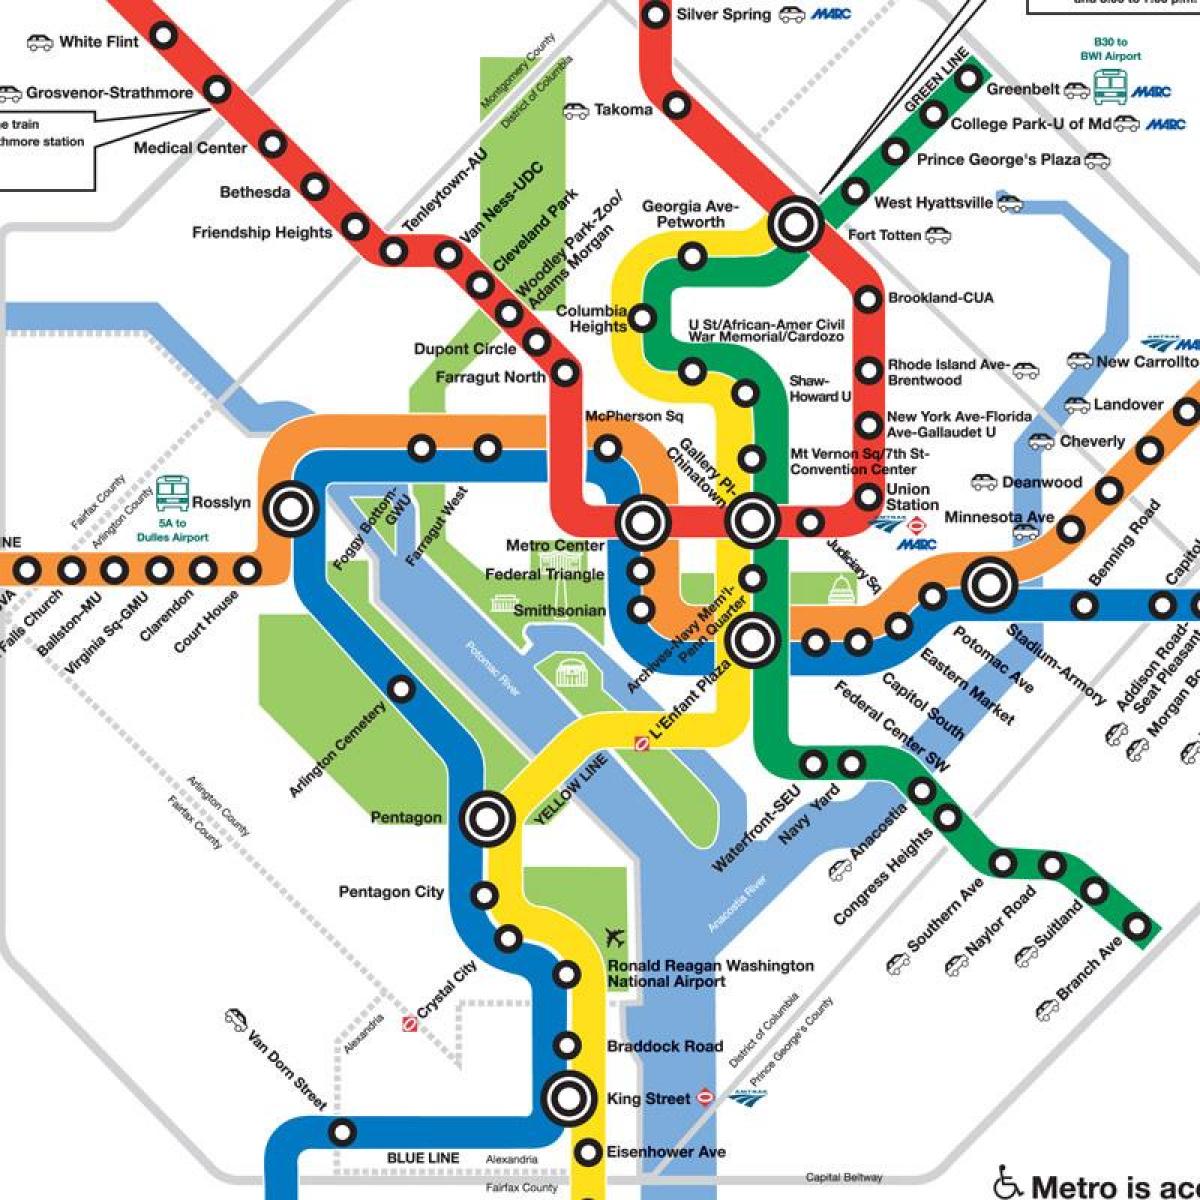 uusi dc metro kartta